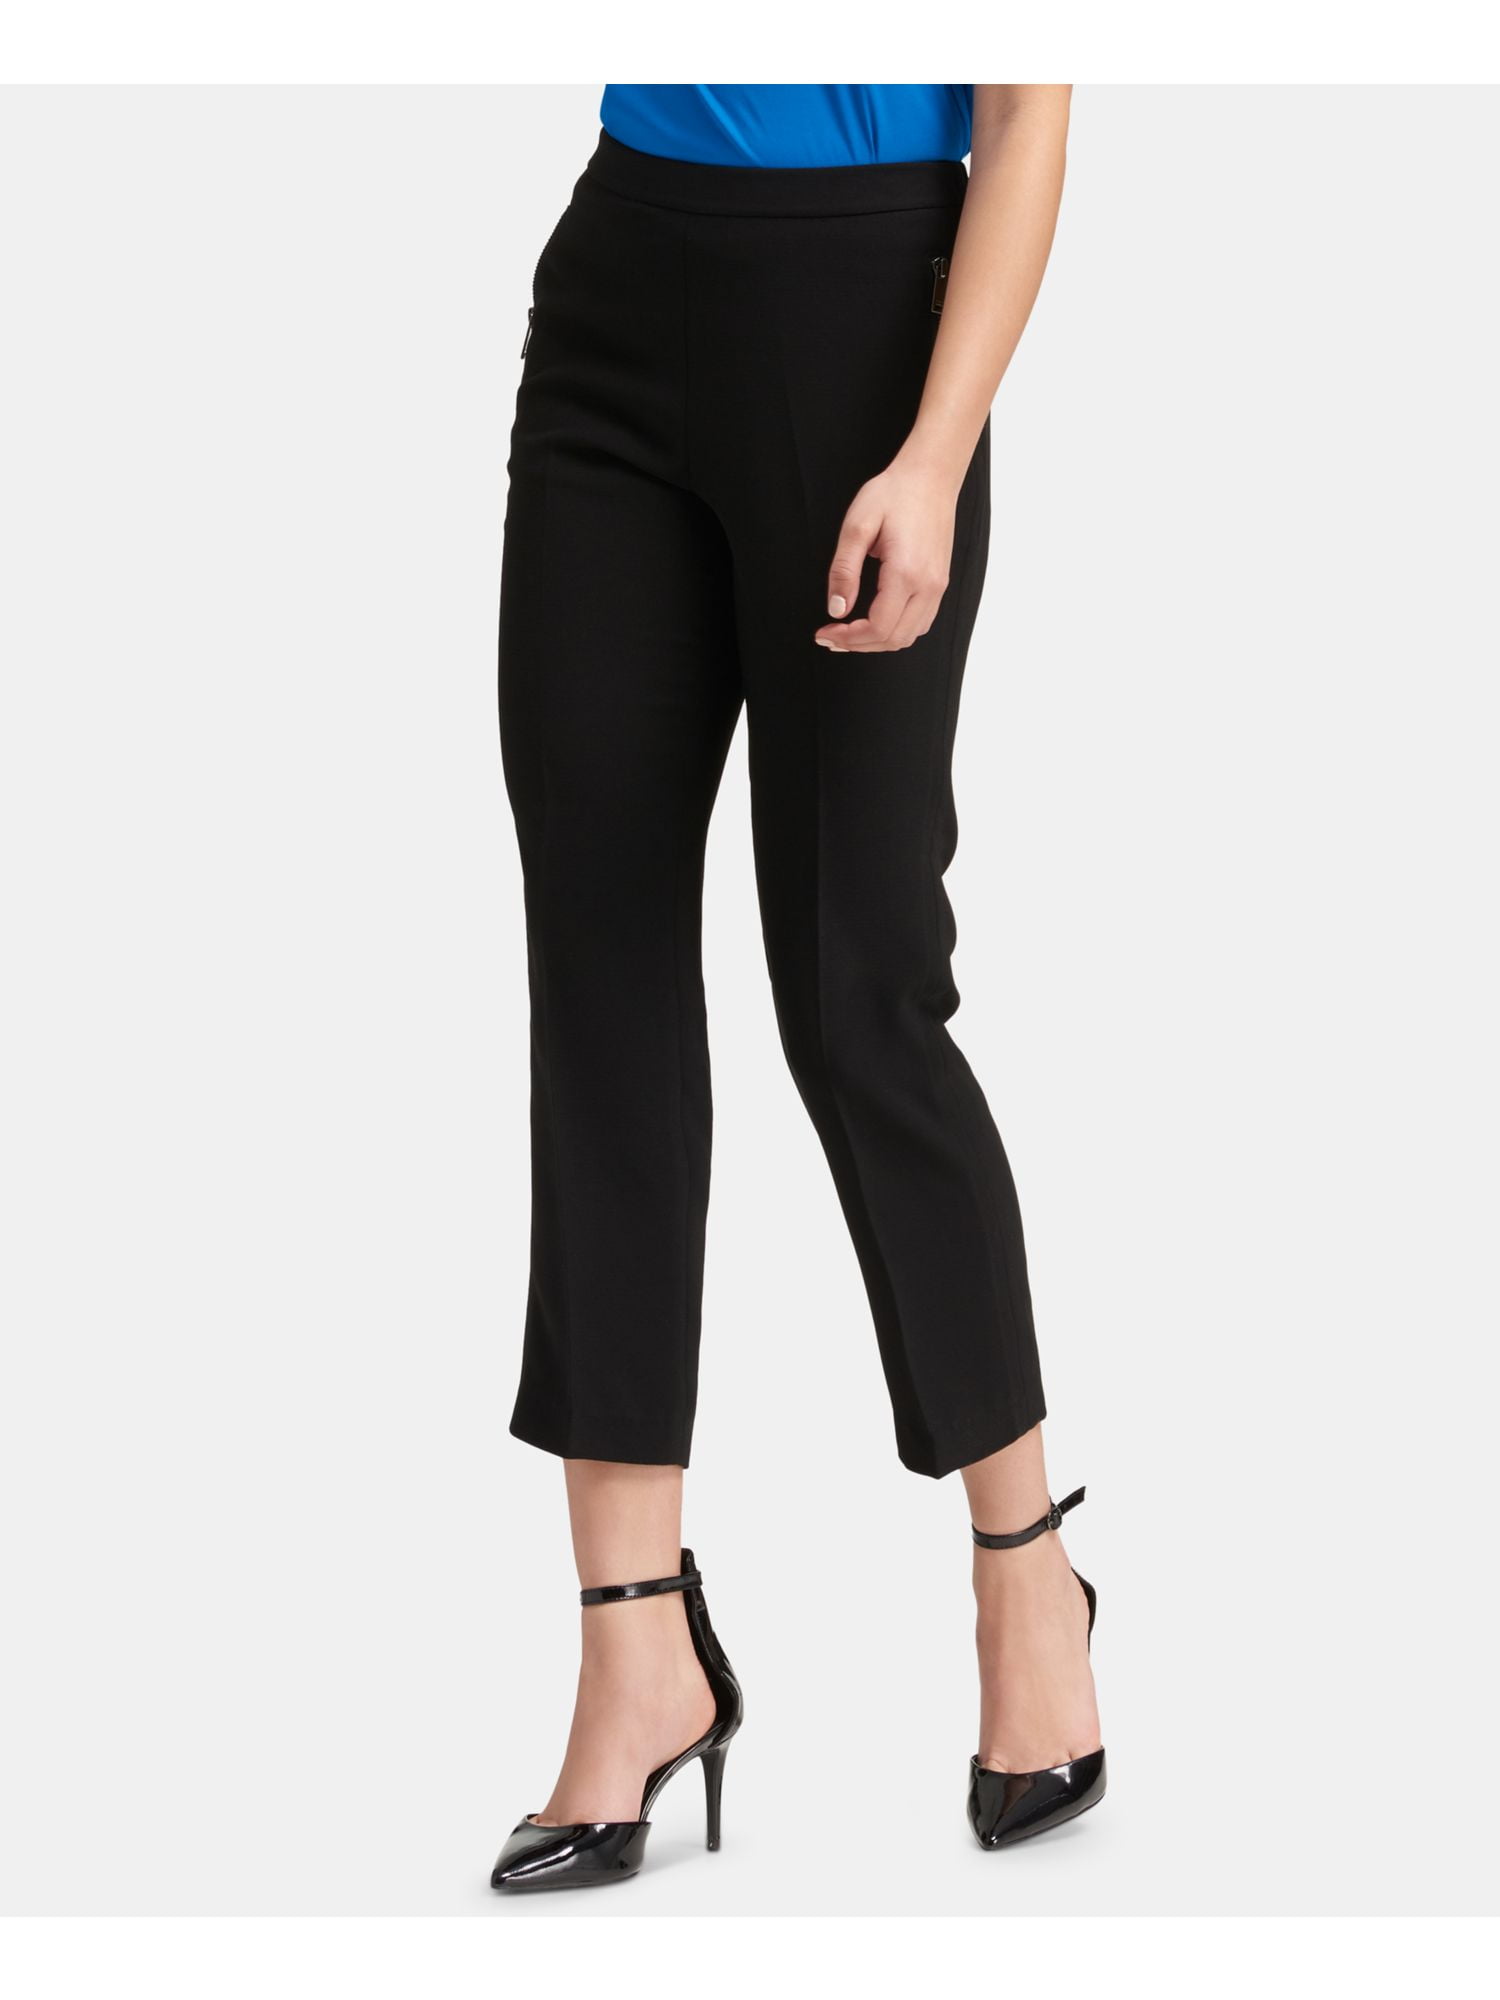 DKNY Womens Pull-On Zip-Pocket Casual Trouser Pants, Black, X